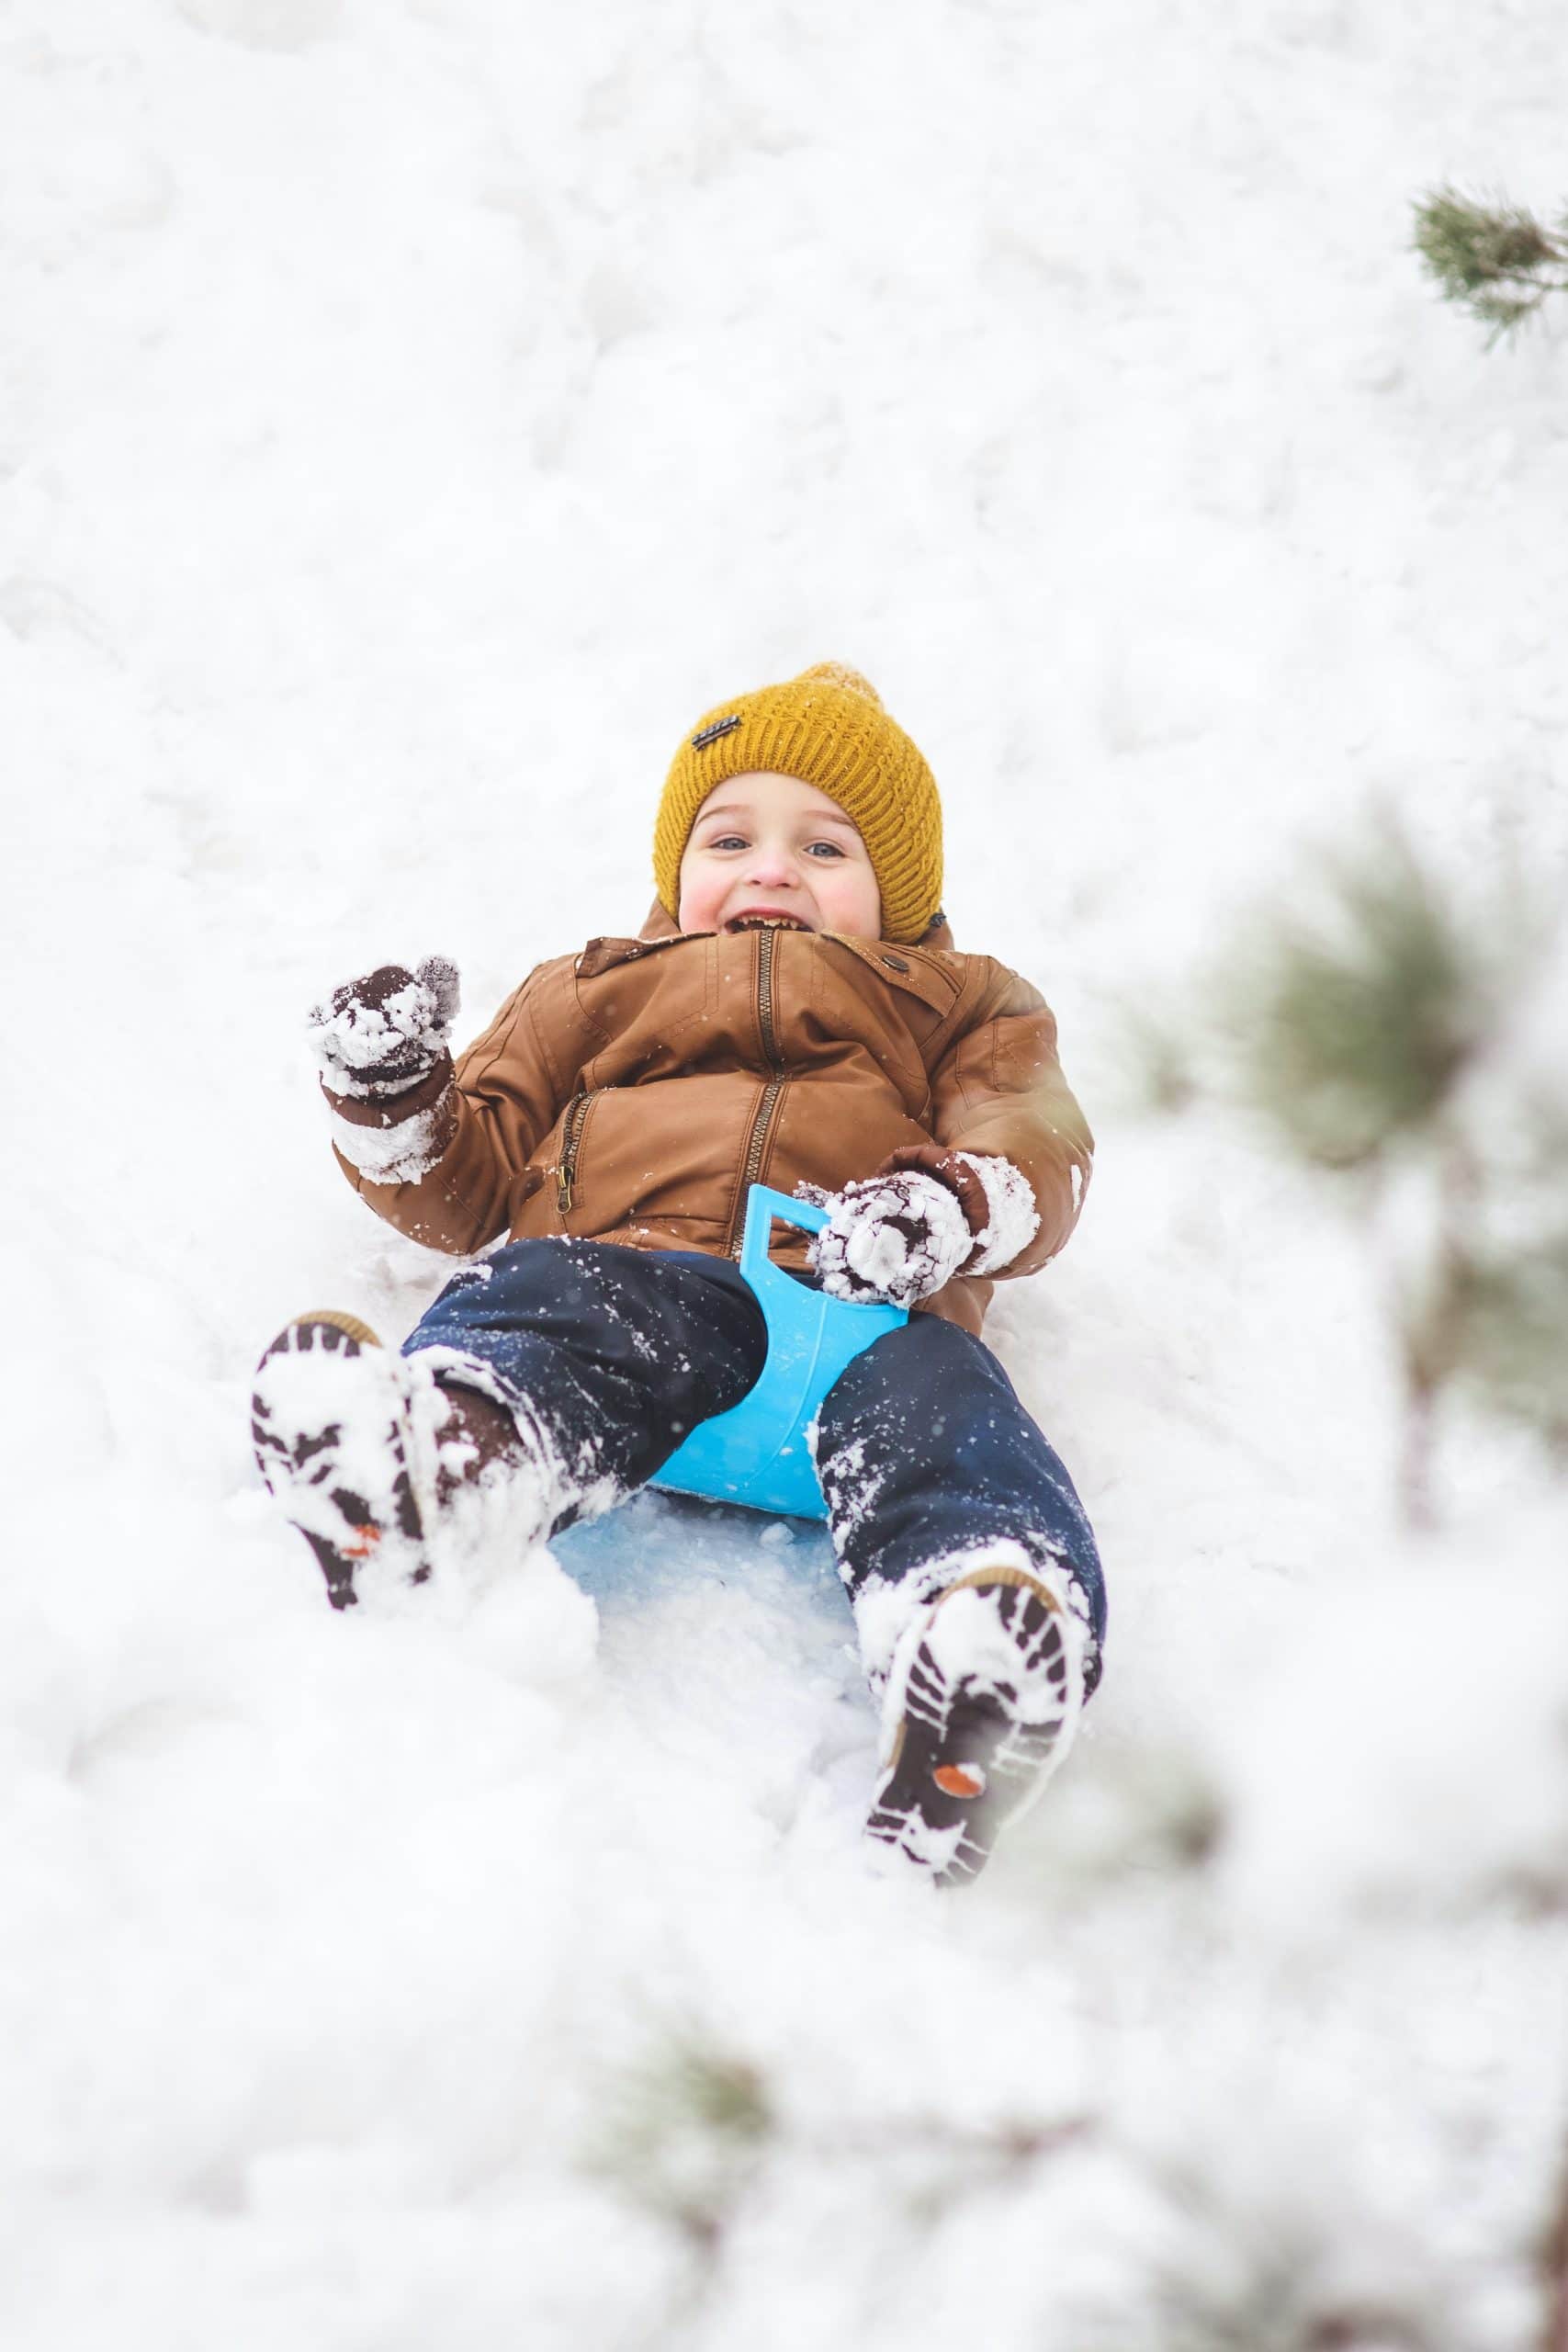 A child sliding down a snowy hill (Ohio Sledding Hills)